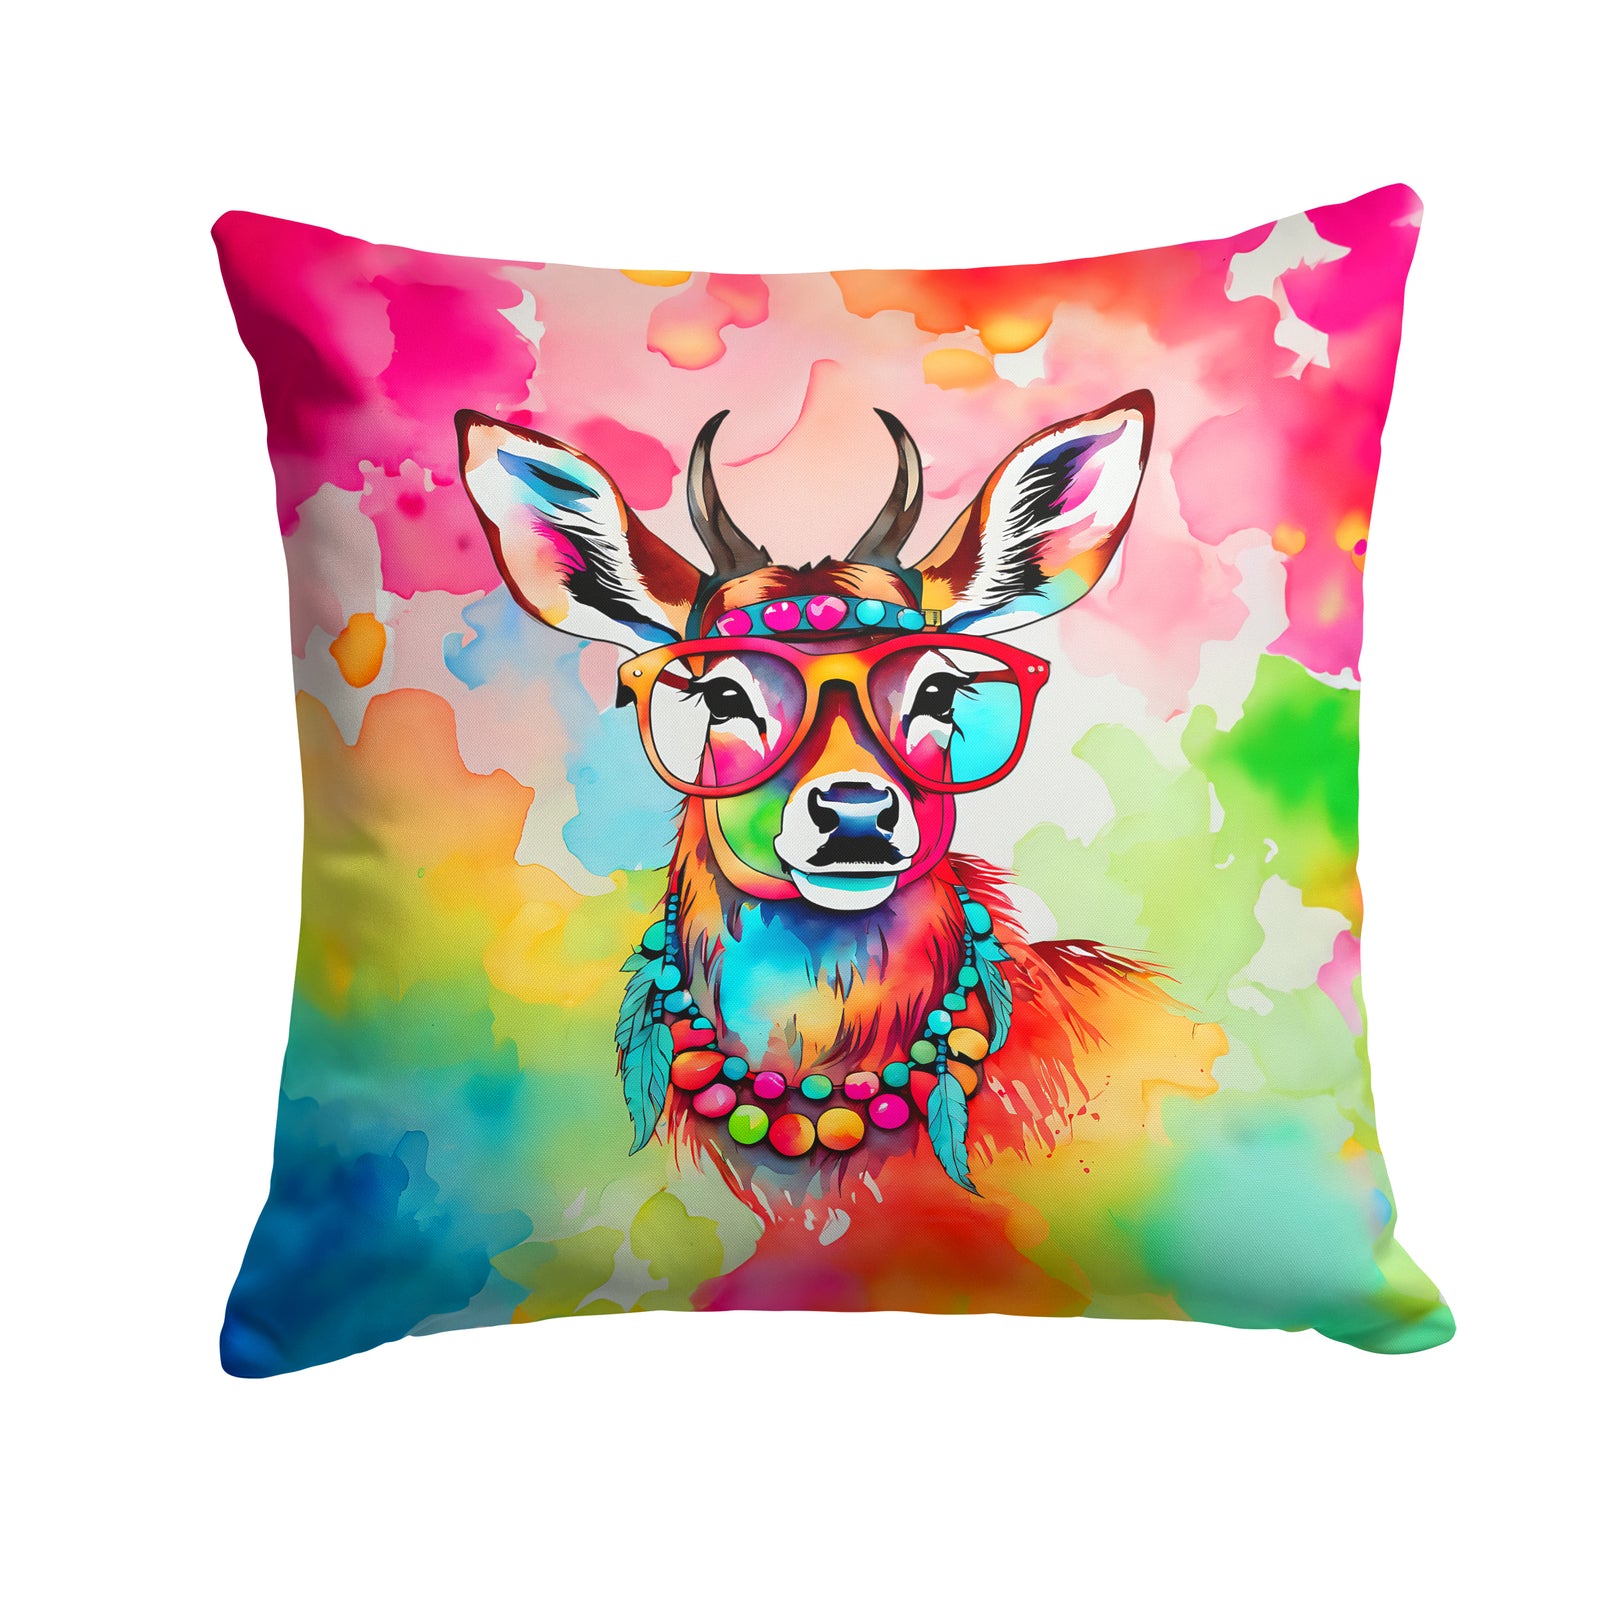 Buy this Hippie Animal Deer Throw Pillow